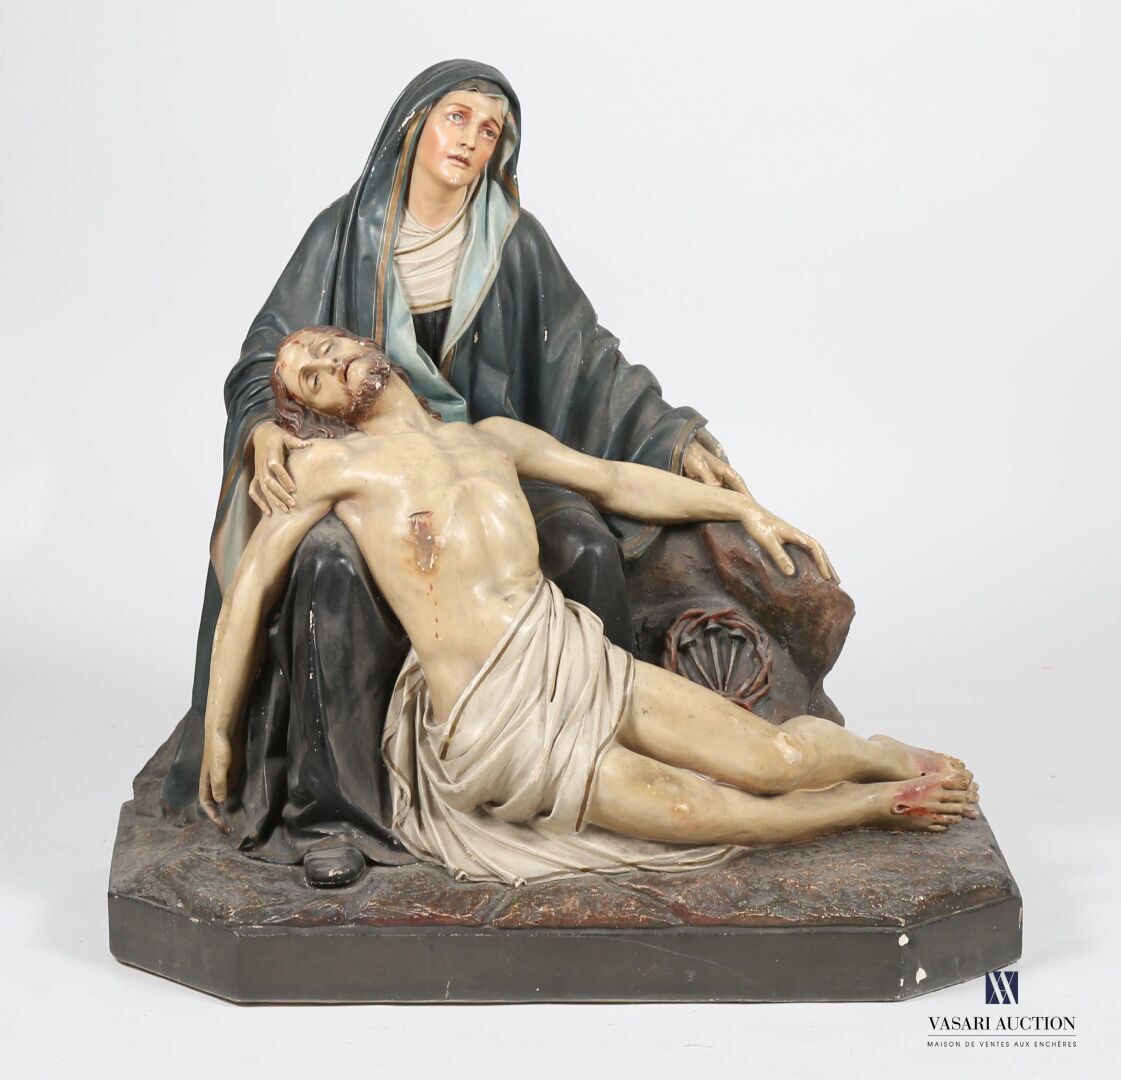 Null DIE RELIGIÖSE STATUE - PARIS
Pieta 
Bedeutende Skulptur aus polychromem Gip&hellip;